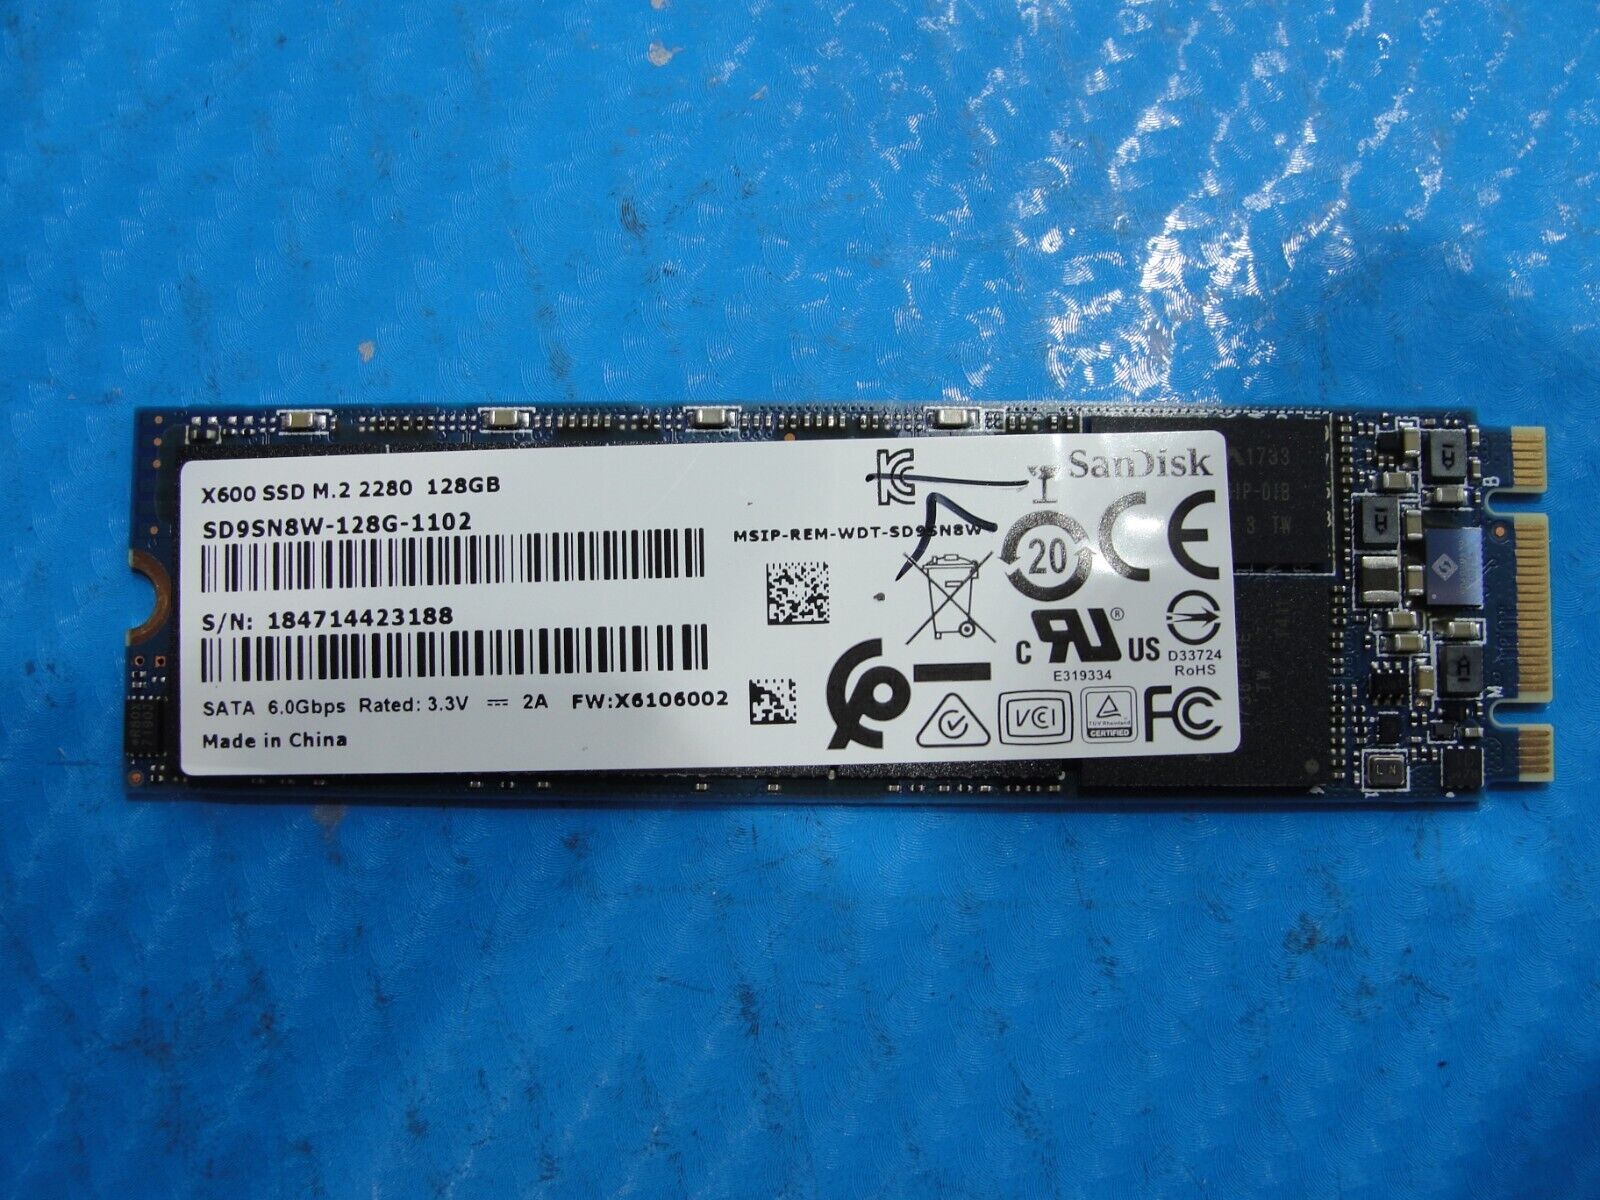 Asus X420UA SanDisk X600 Sata M.2 128Gb Ssd Solid State Drive SD9SN8W-128G-1102